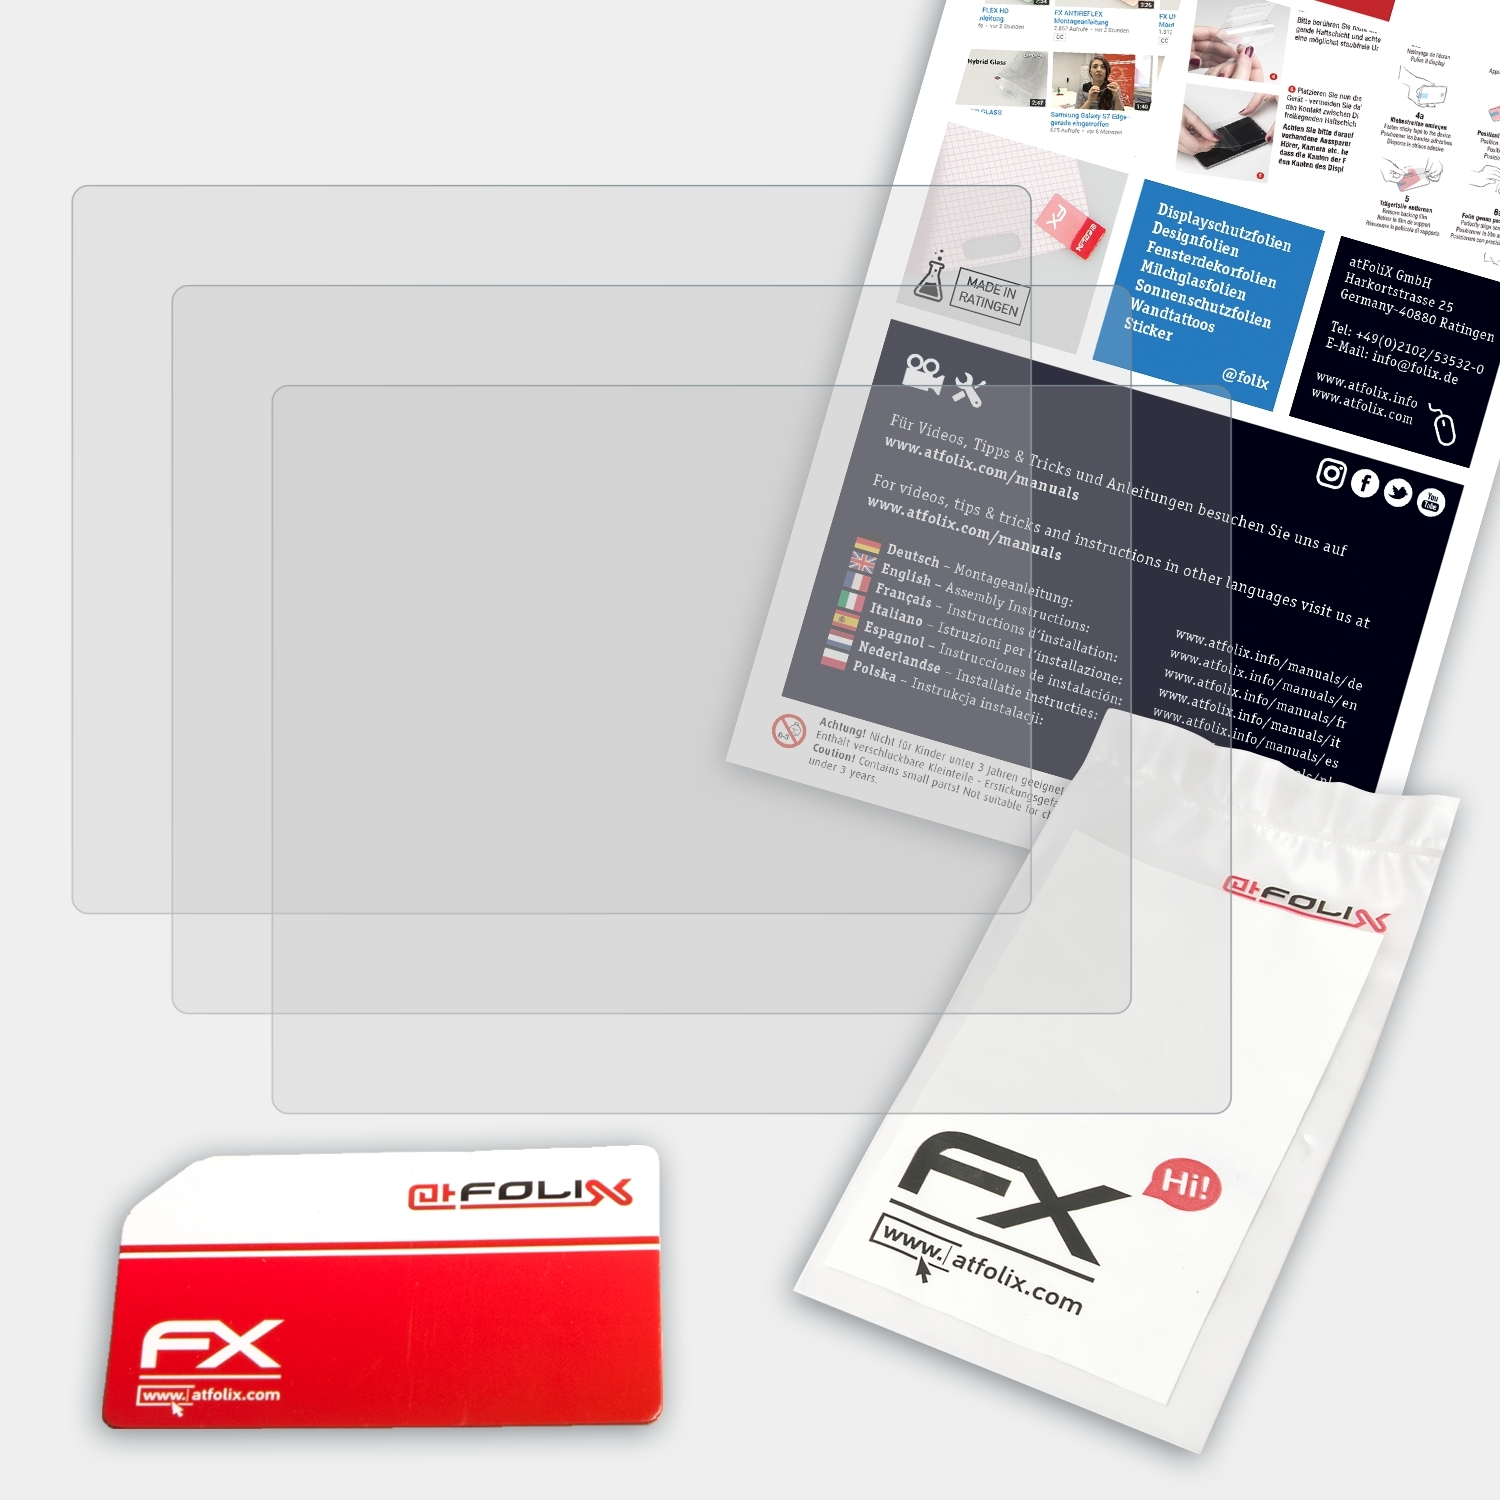 Displayschutz(für 3x FinePix Fujifilm ATFOLIX X100S) FX-Antireflex